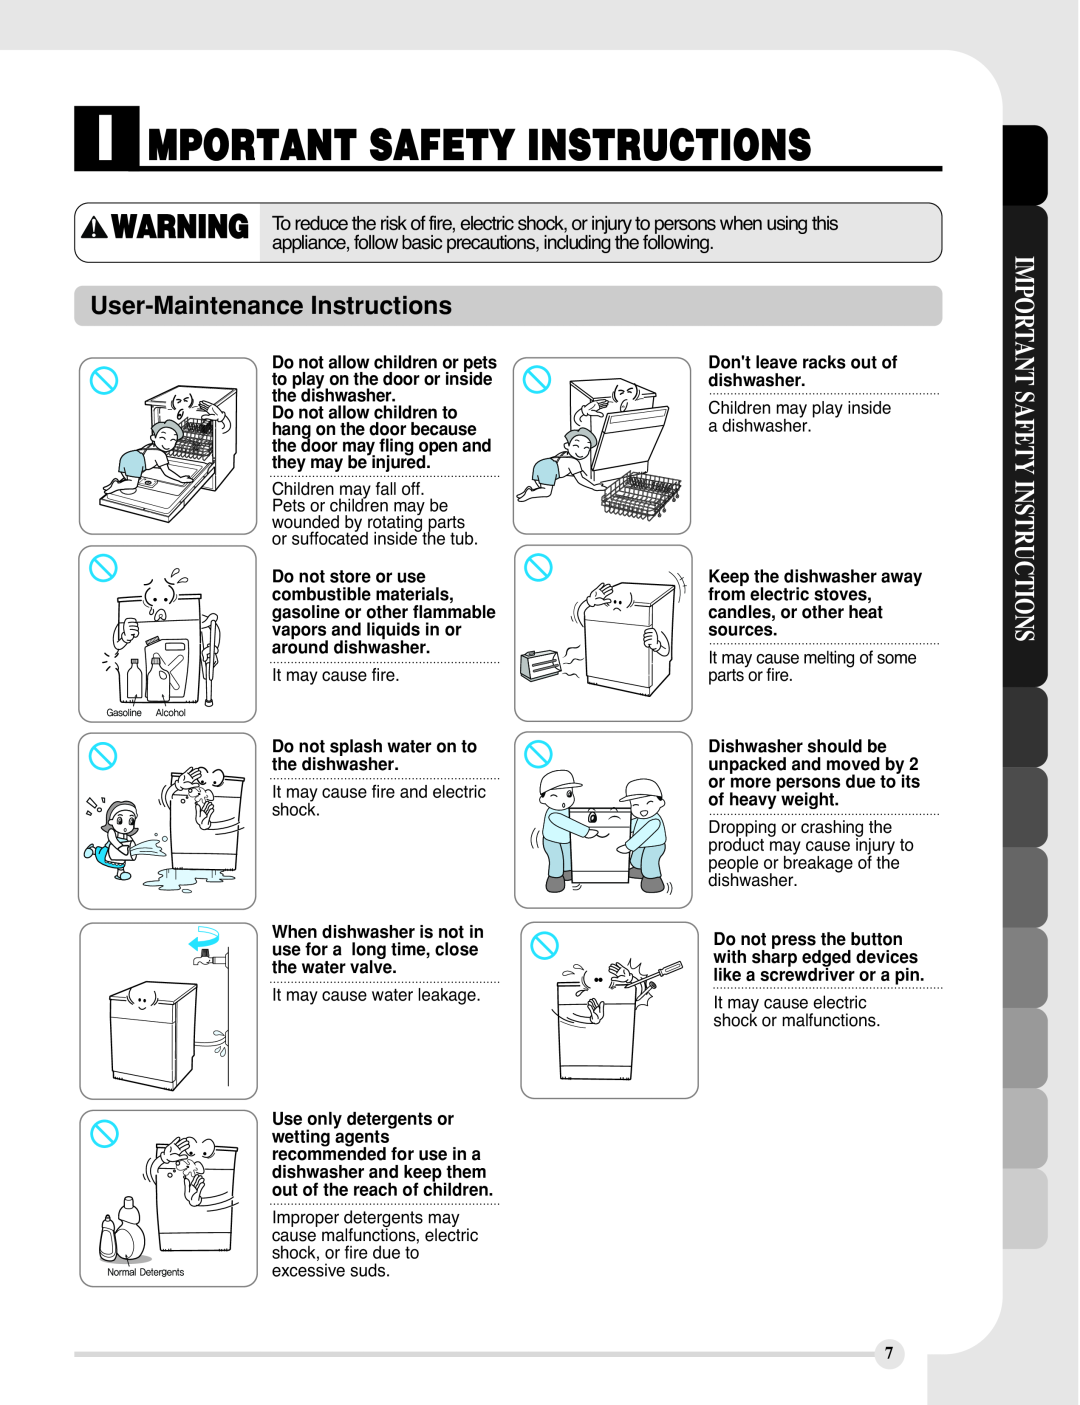 LG Electronics LDF9810BB User-Maintenance Instructions, I Mportant Safety Instructions, Important Safety Instructions 